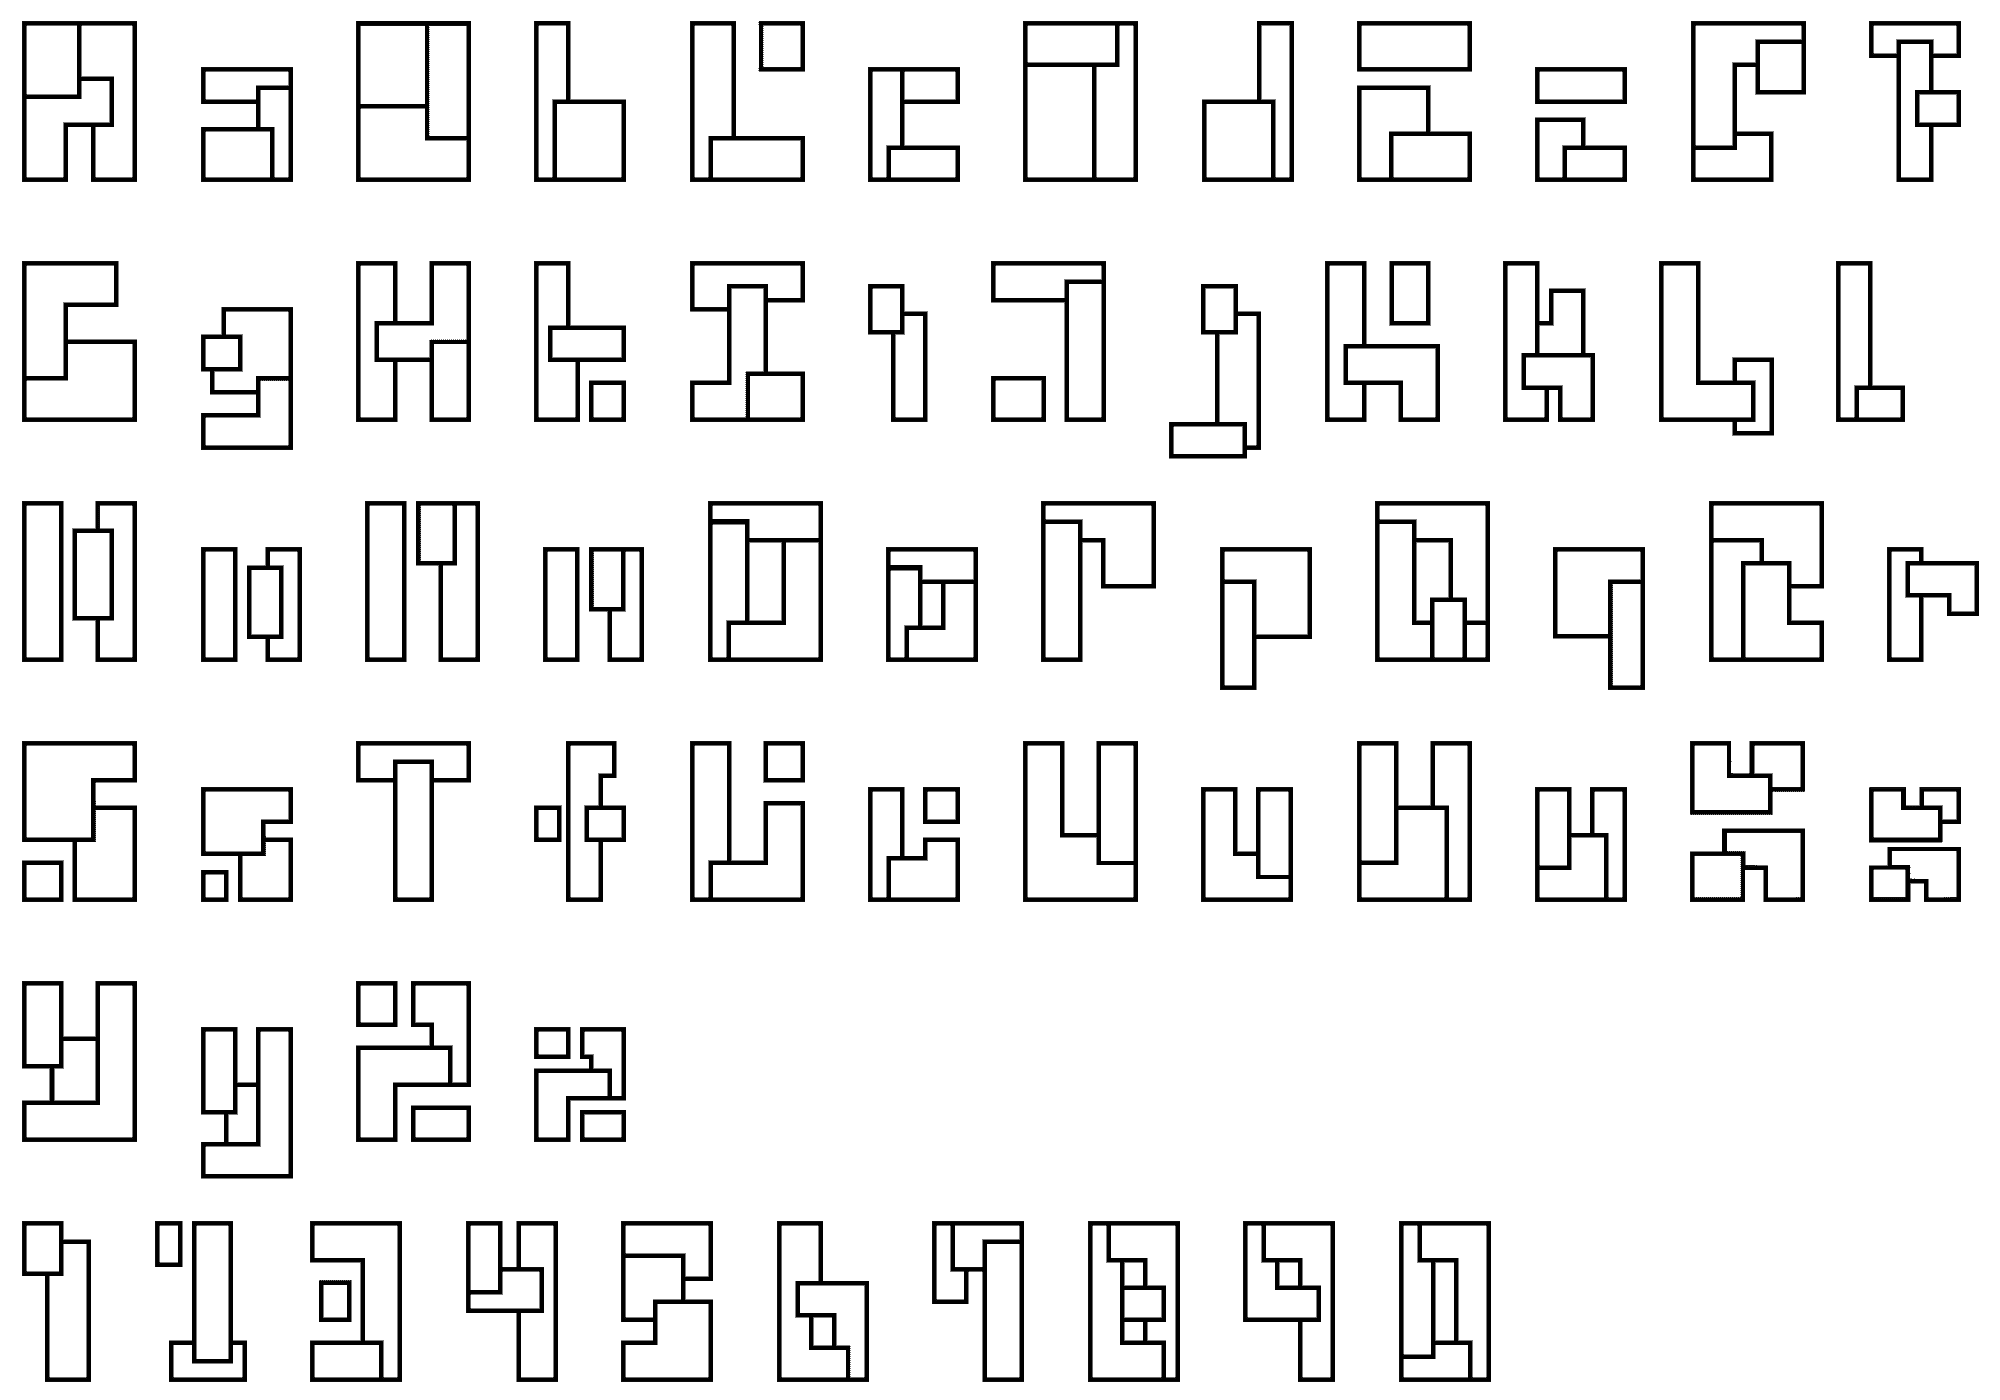 Boron font inspired by Tetris